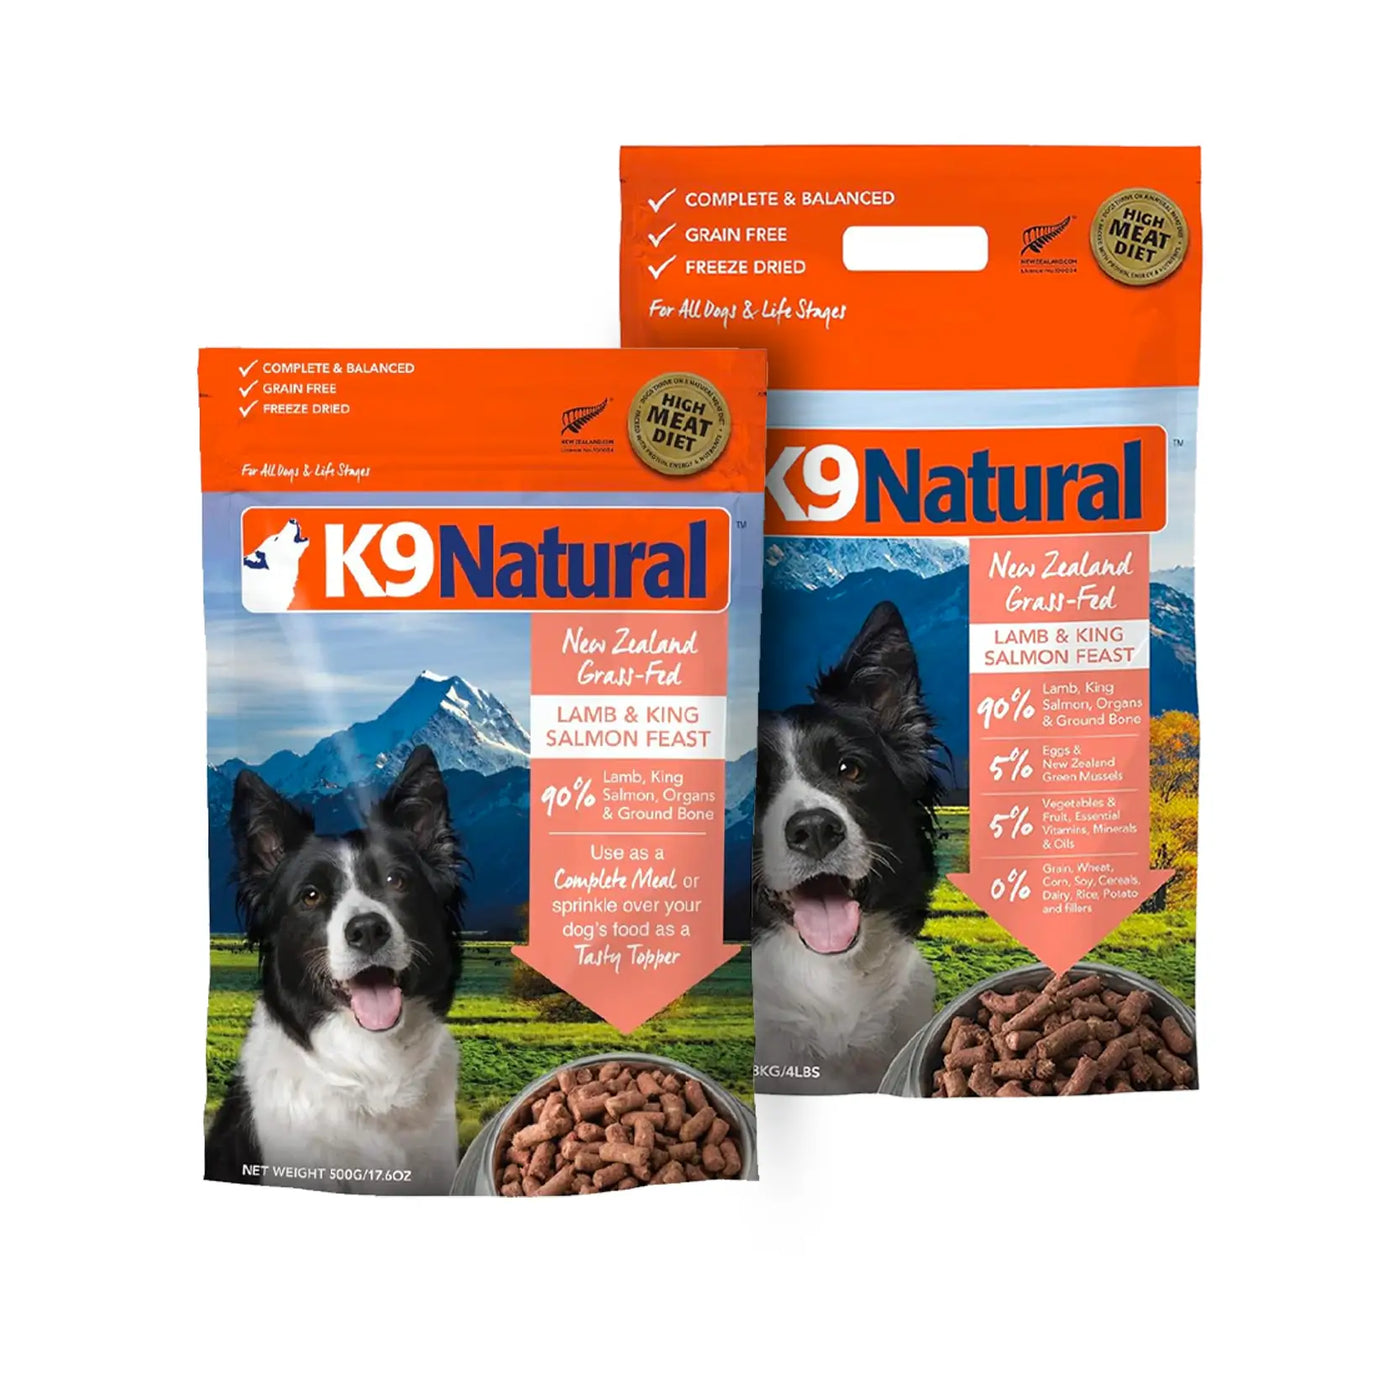 K9 Natural Freeze Dried Dog Food - Lamb & King Salmon Feast